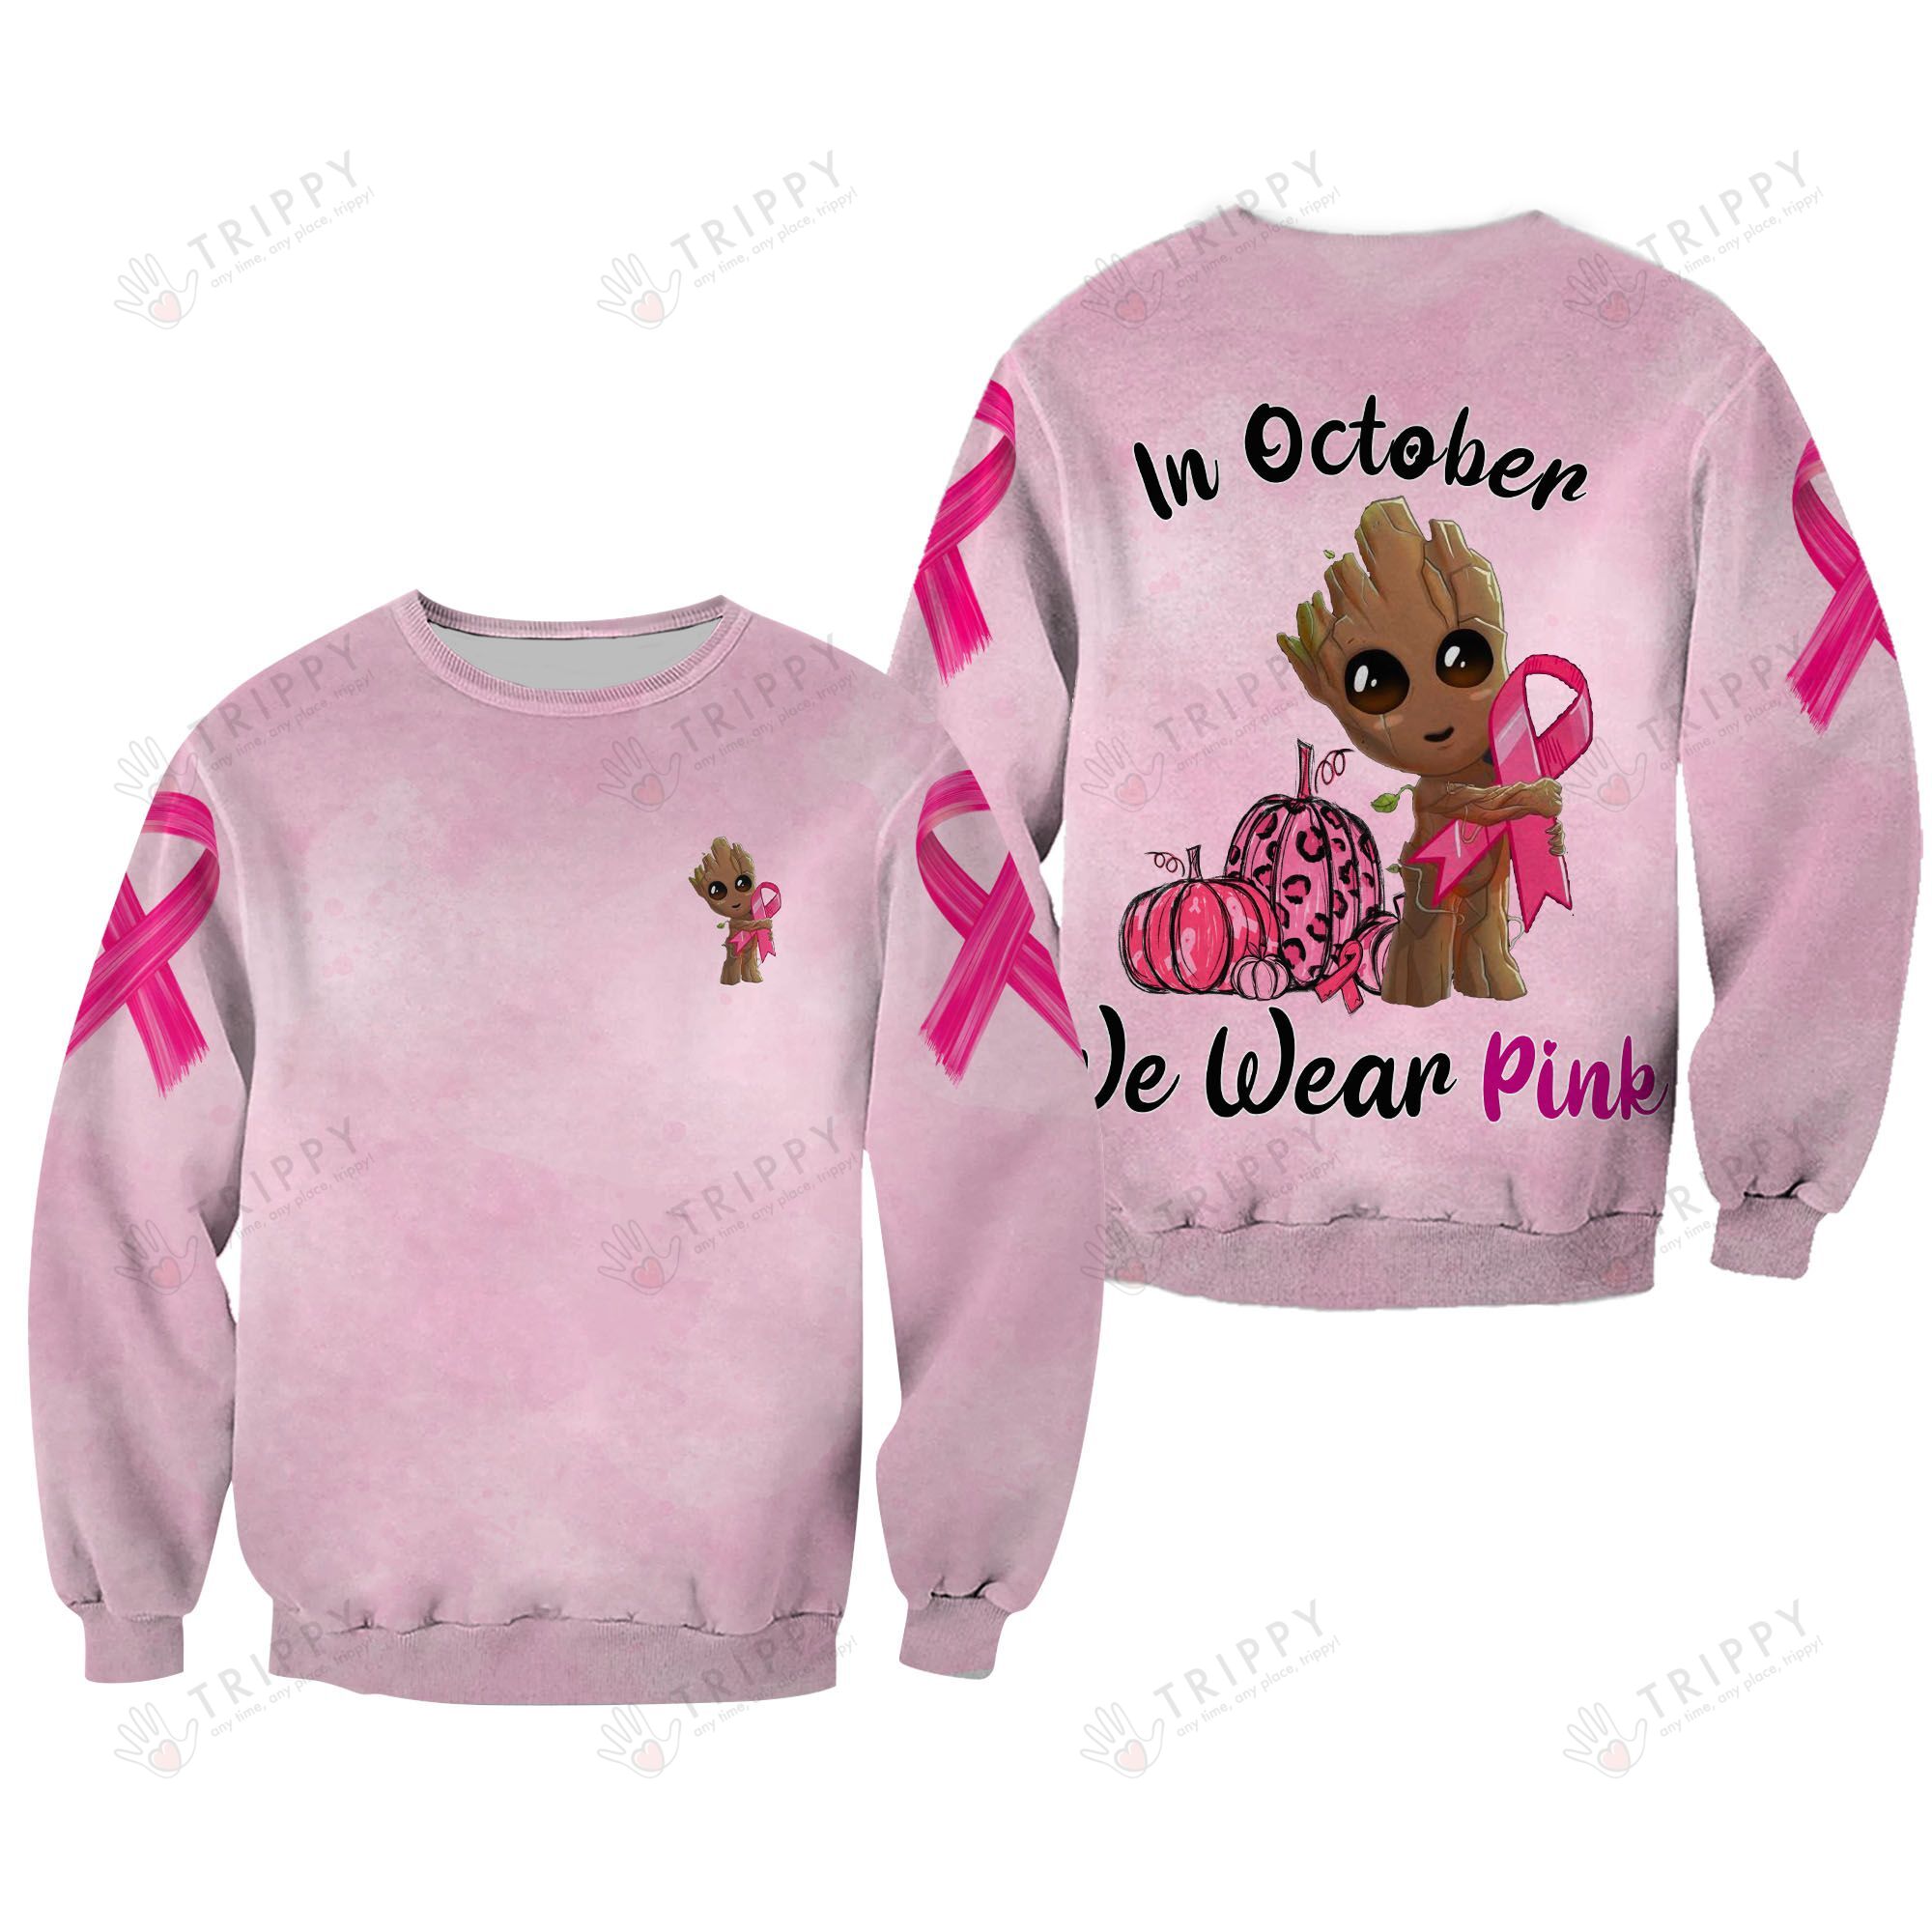 Groot Breast Cancer In October we were pink 3d hoodie shirt 9